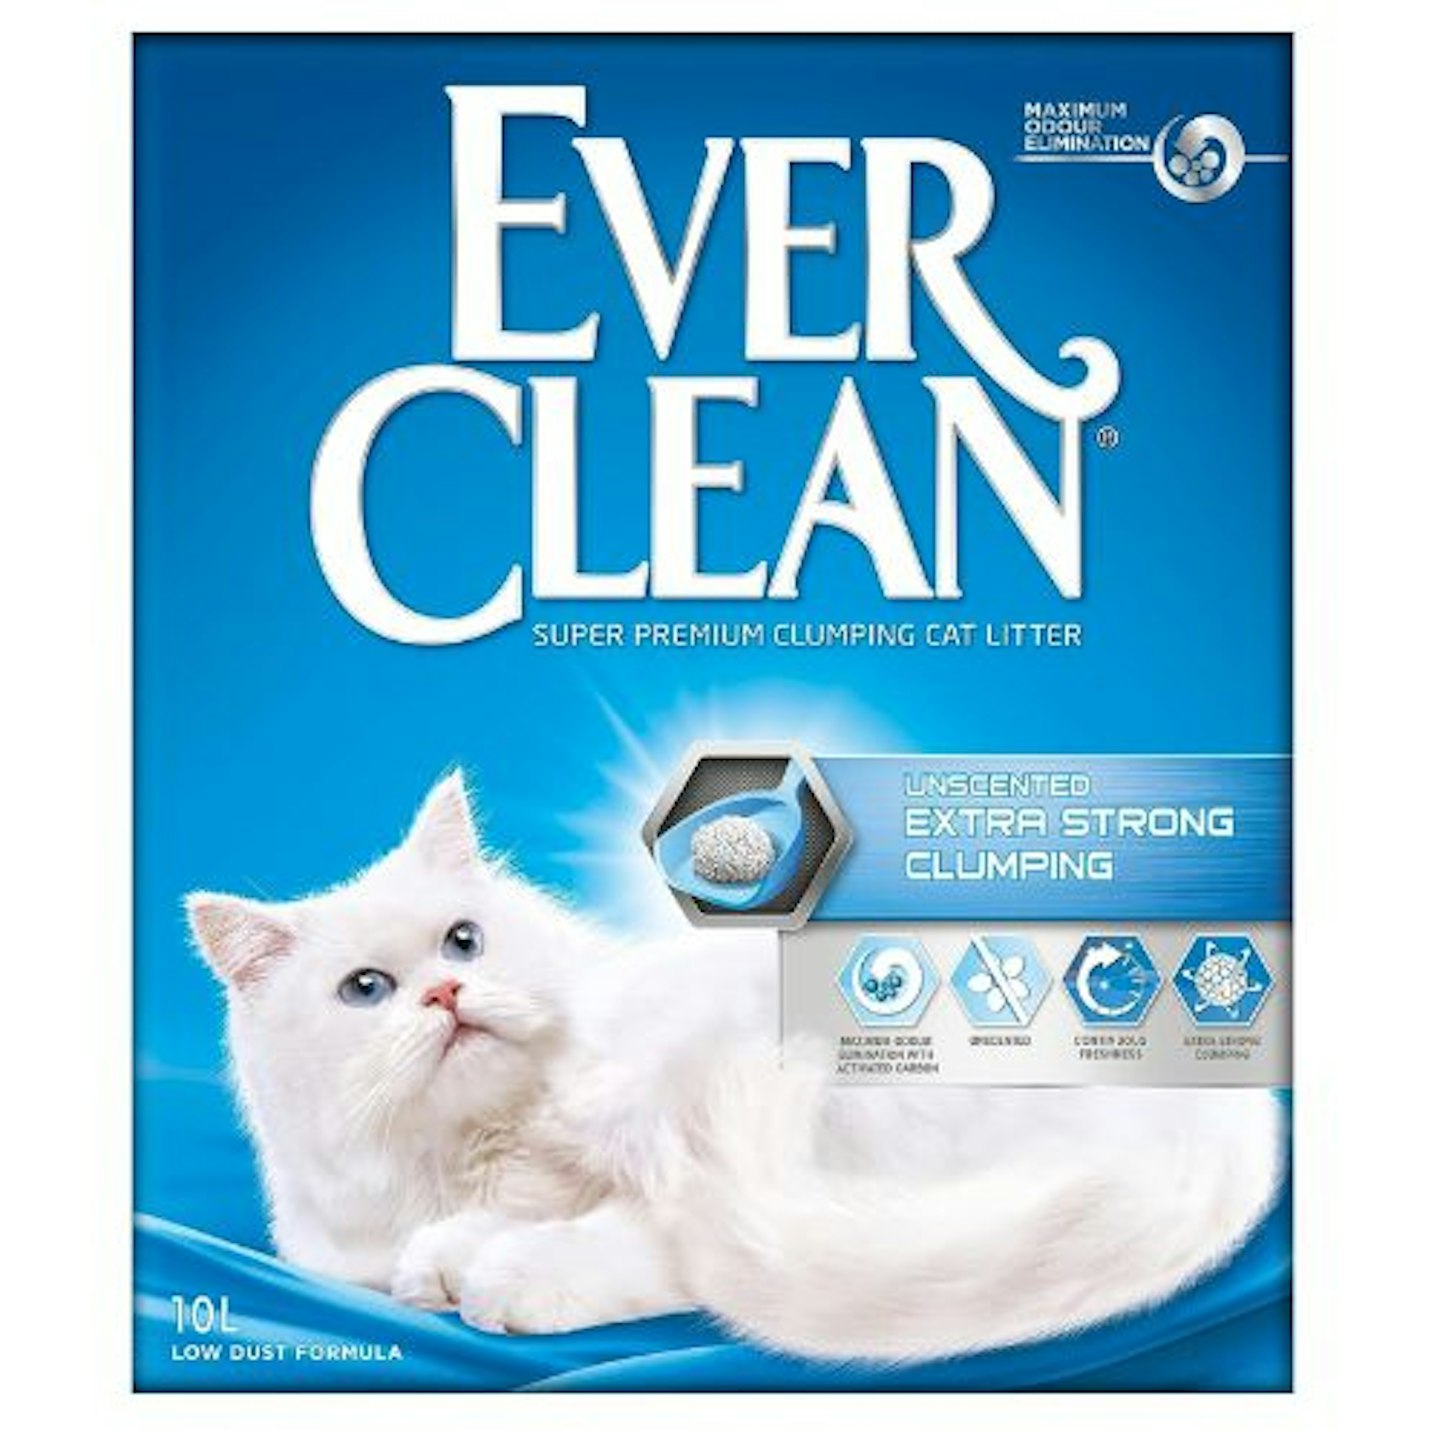 Ever Clean Clumping Cat Litter